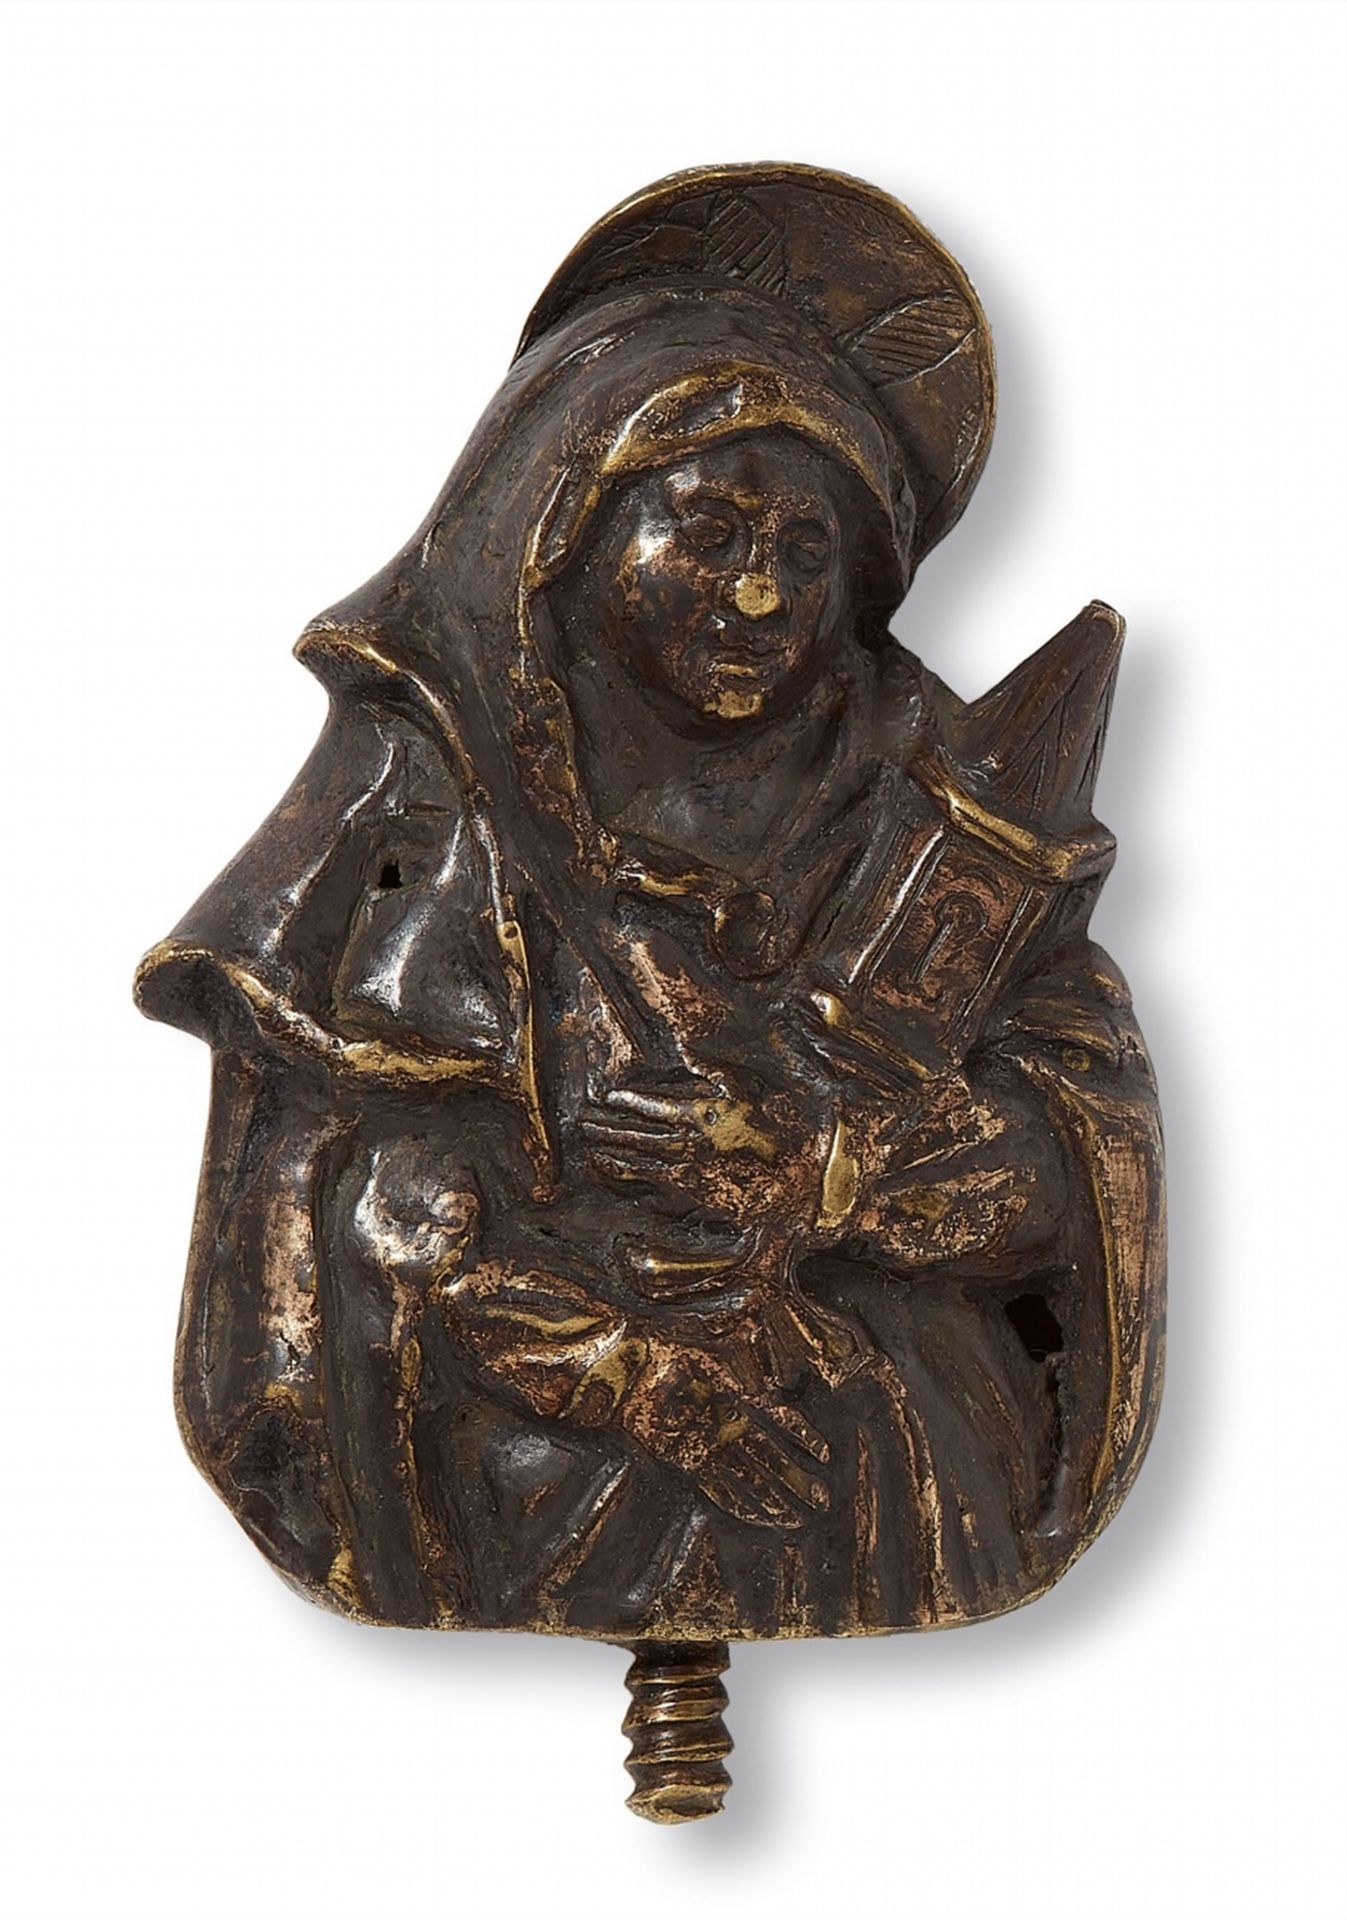 A 15th century Flemish bronze bust of Saint Clare